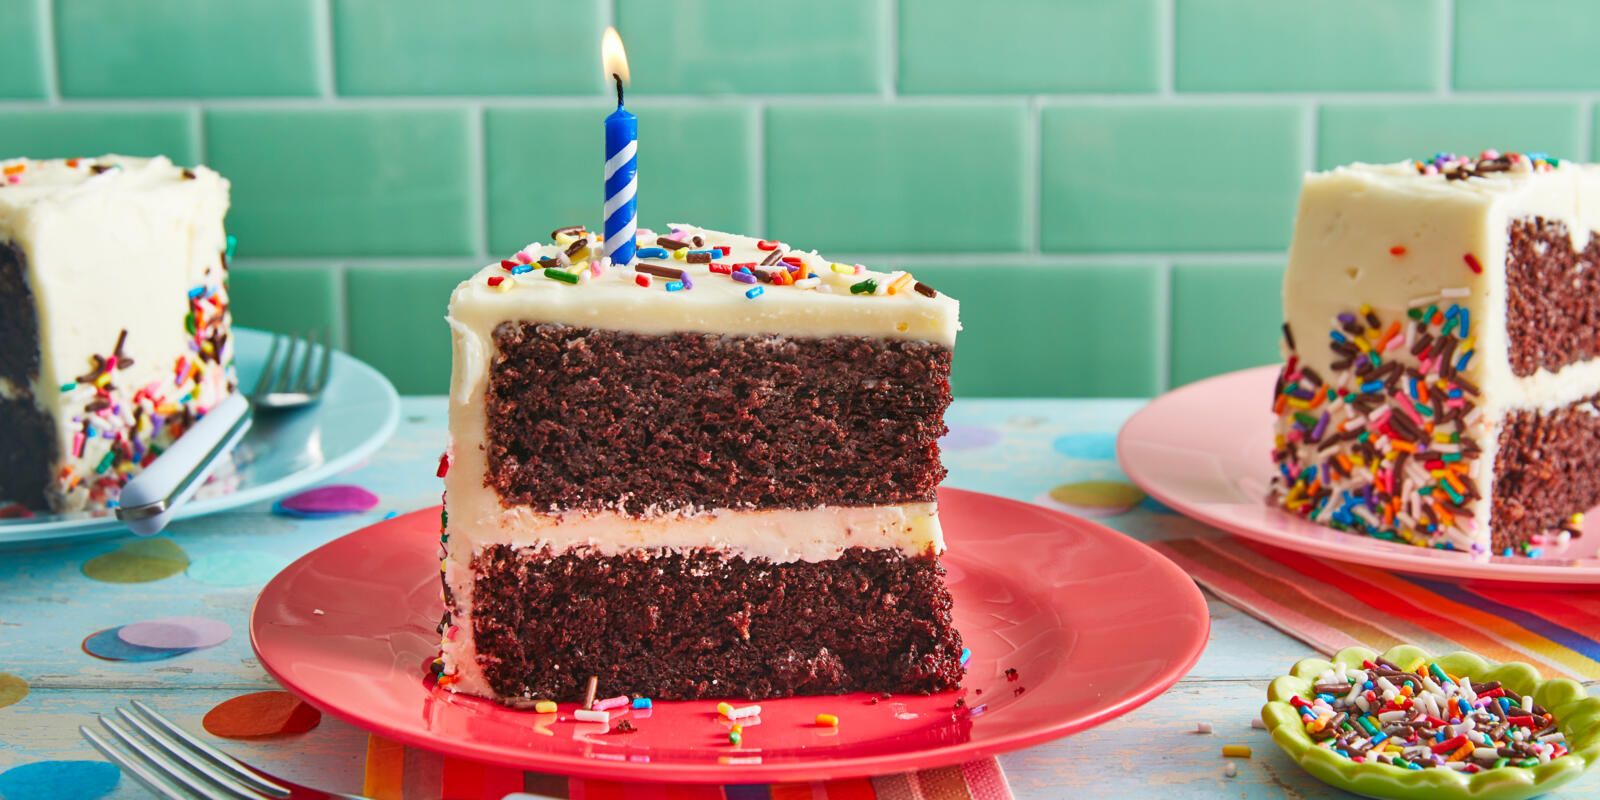 Happy Birthday Wishes Box | Share Joy